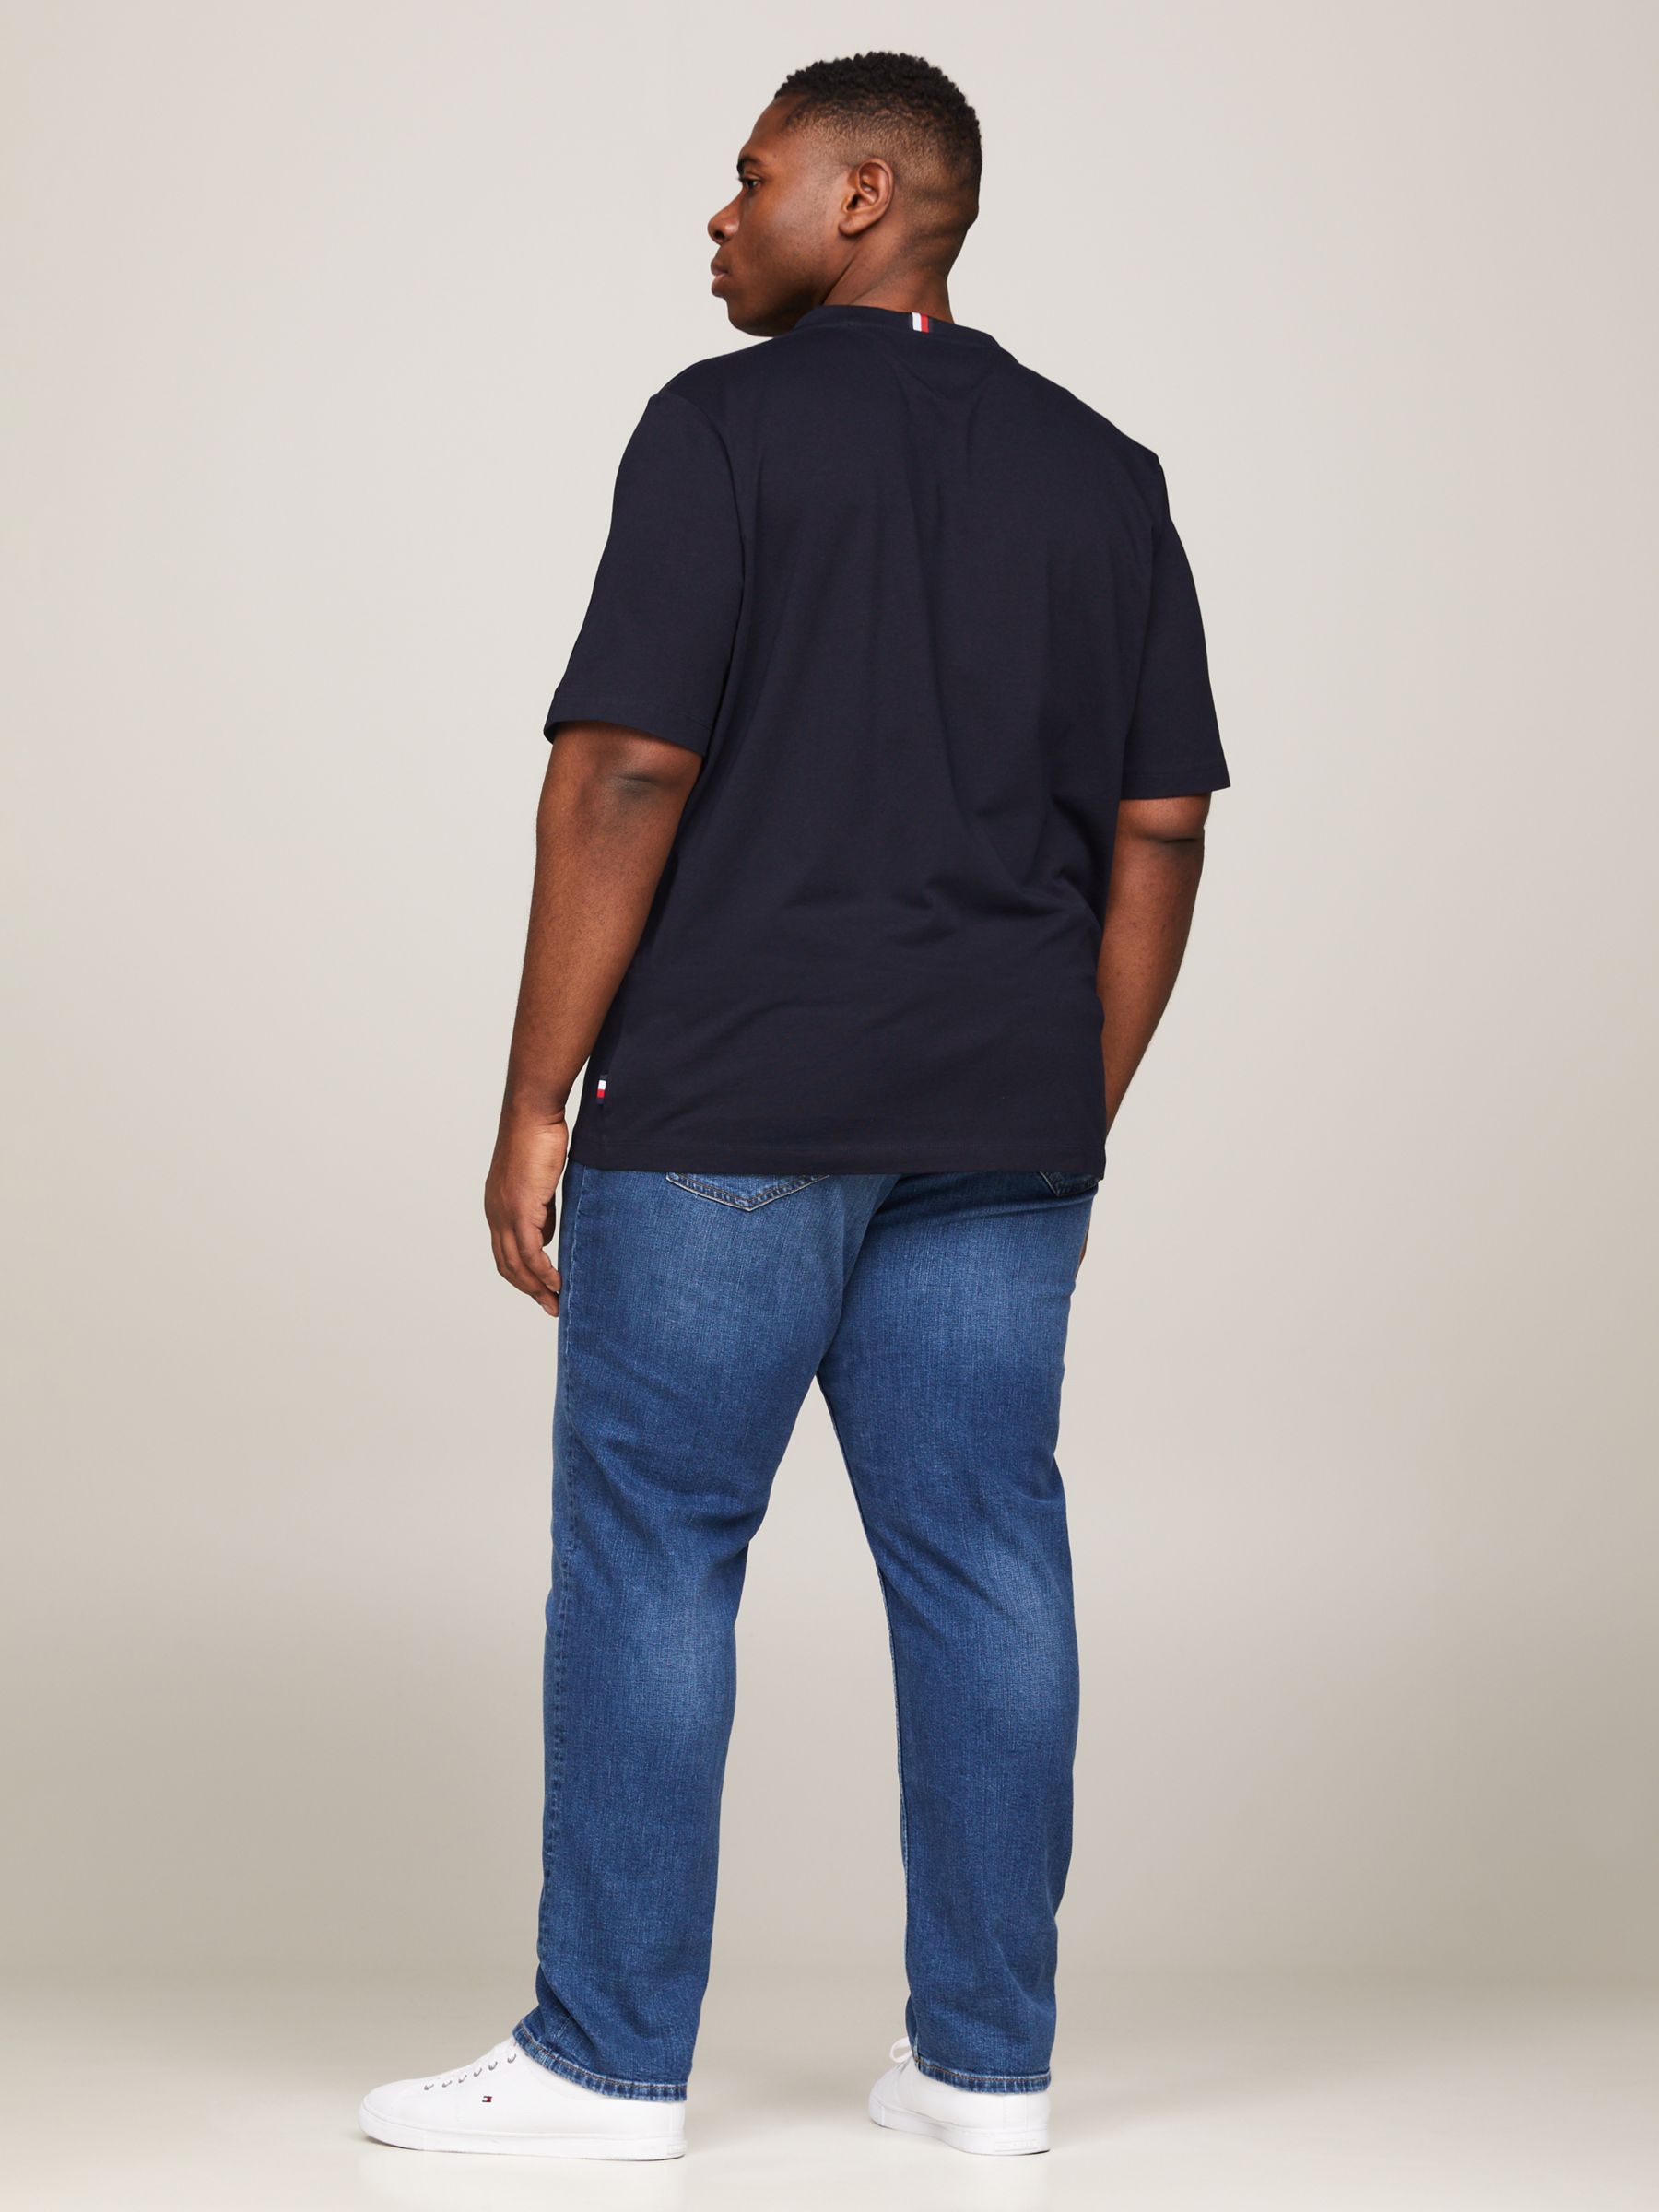 Tommy Hilfiger Big & Tall Graphic T-Shirt, Desert Sky, XXXL